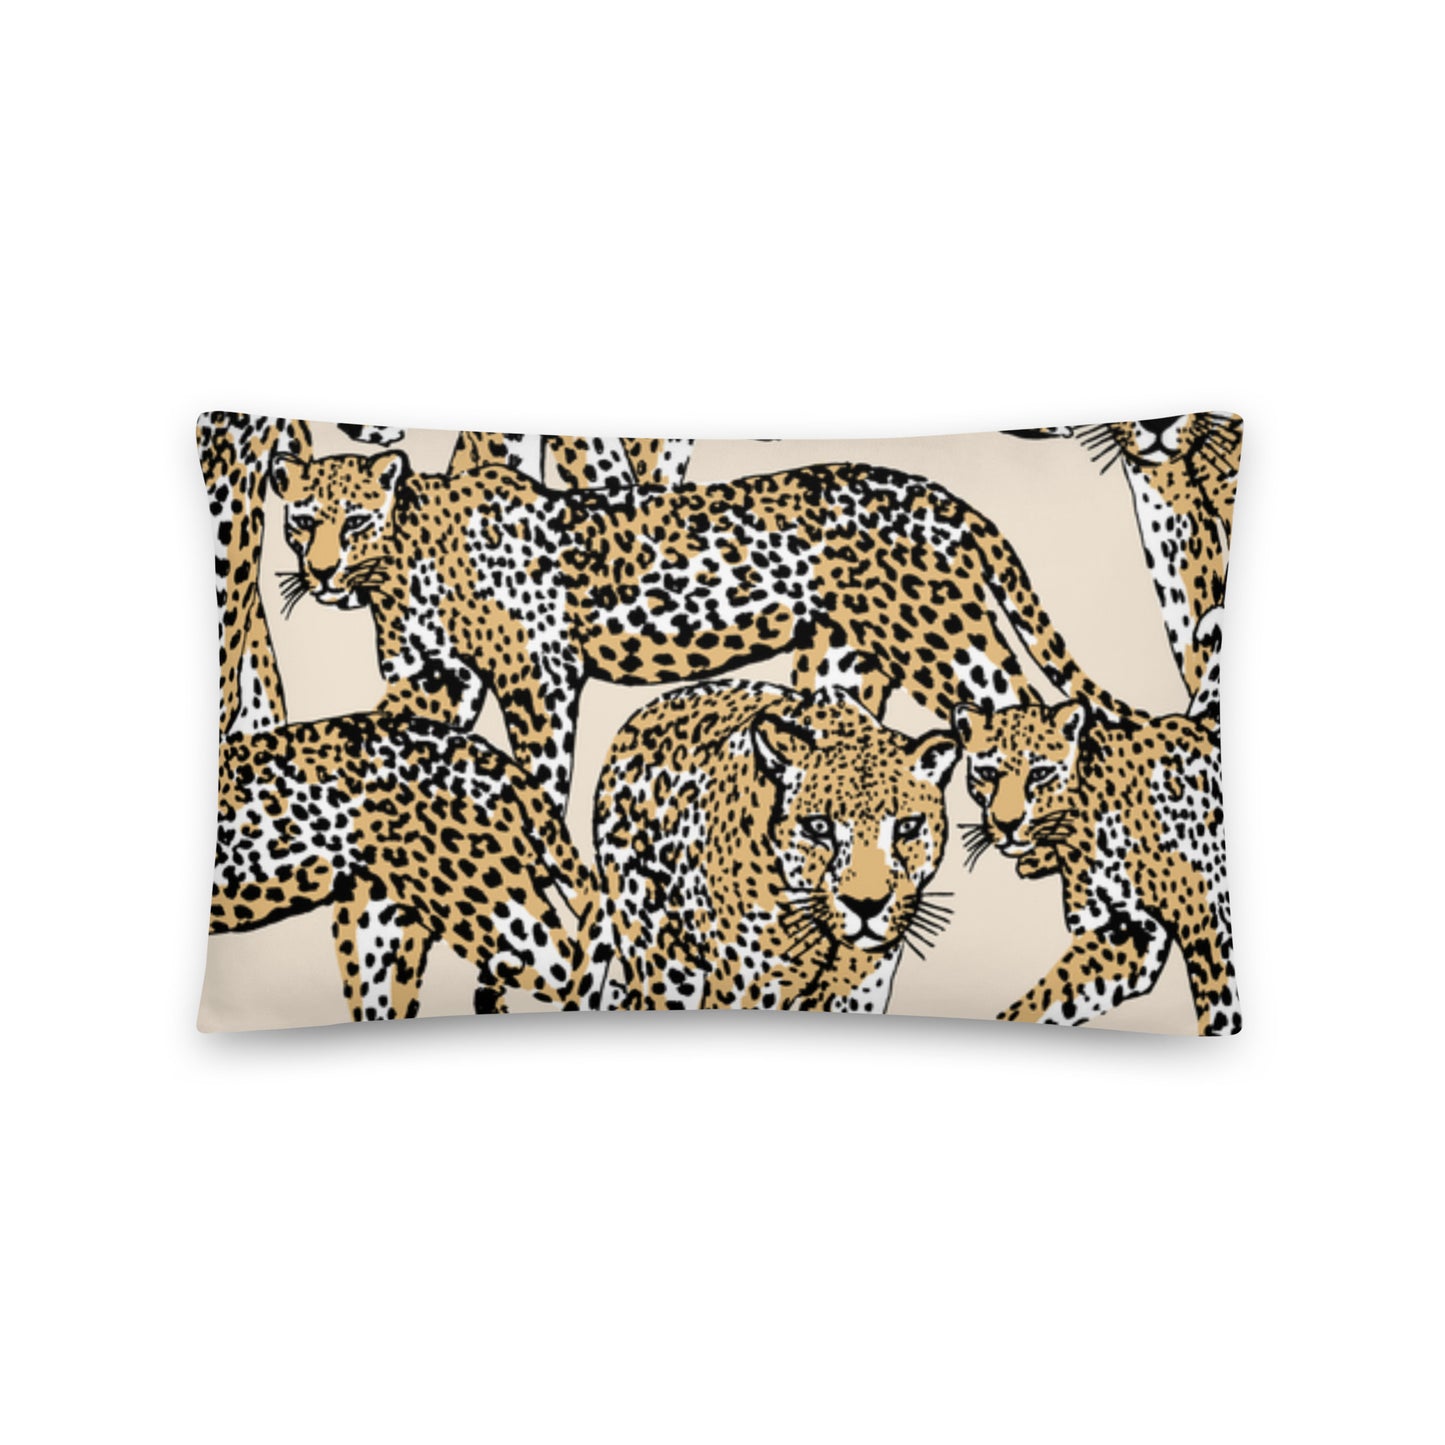 A soft throw pillow printed with Cheetahs